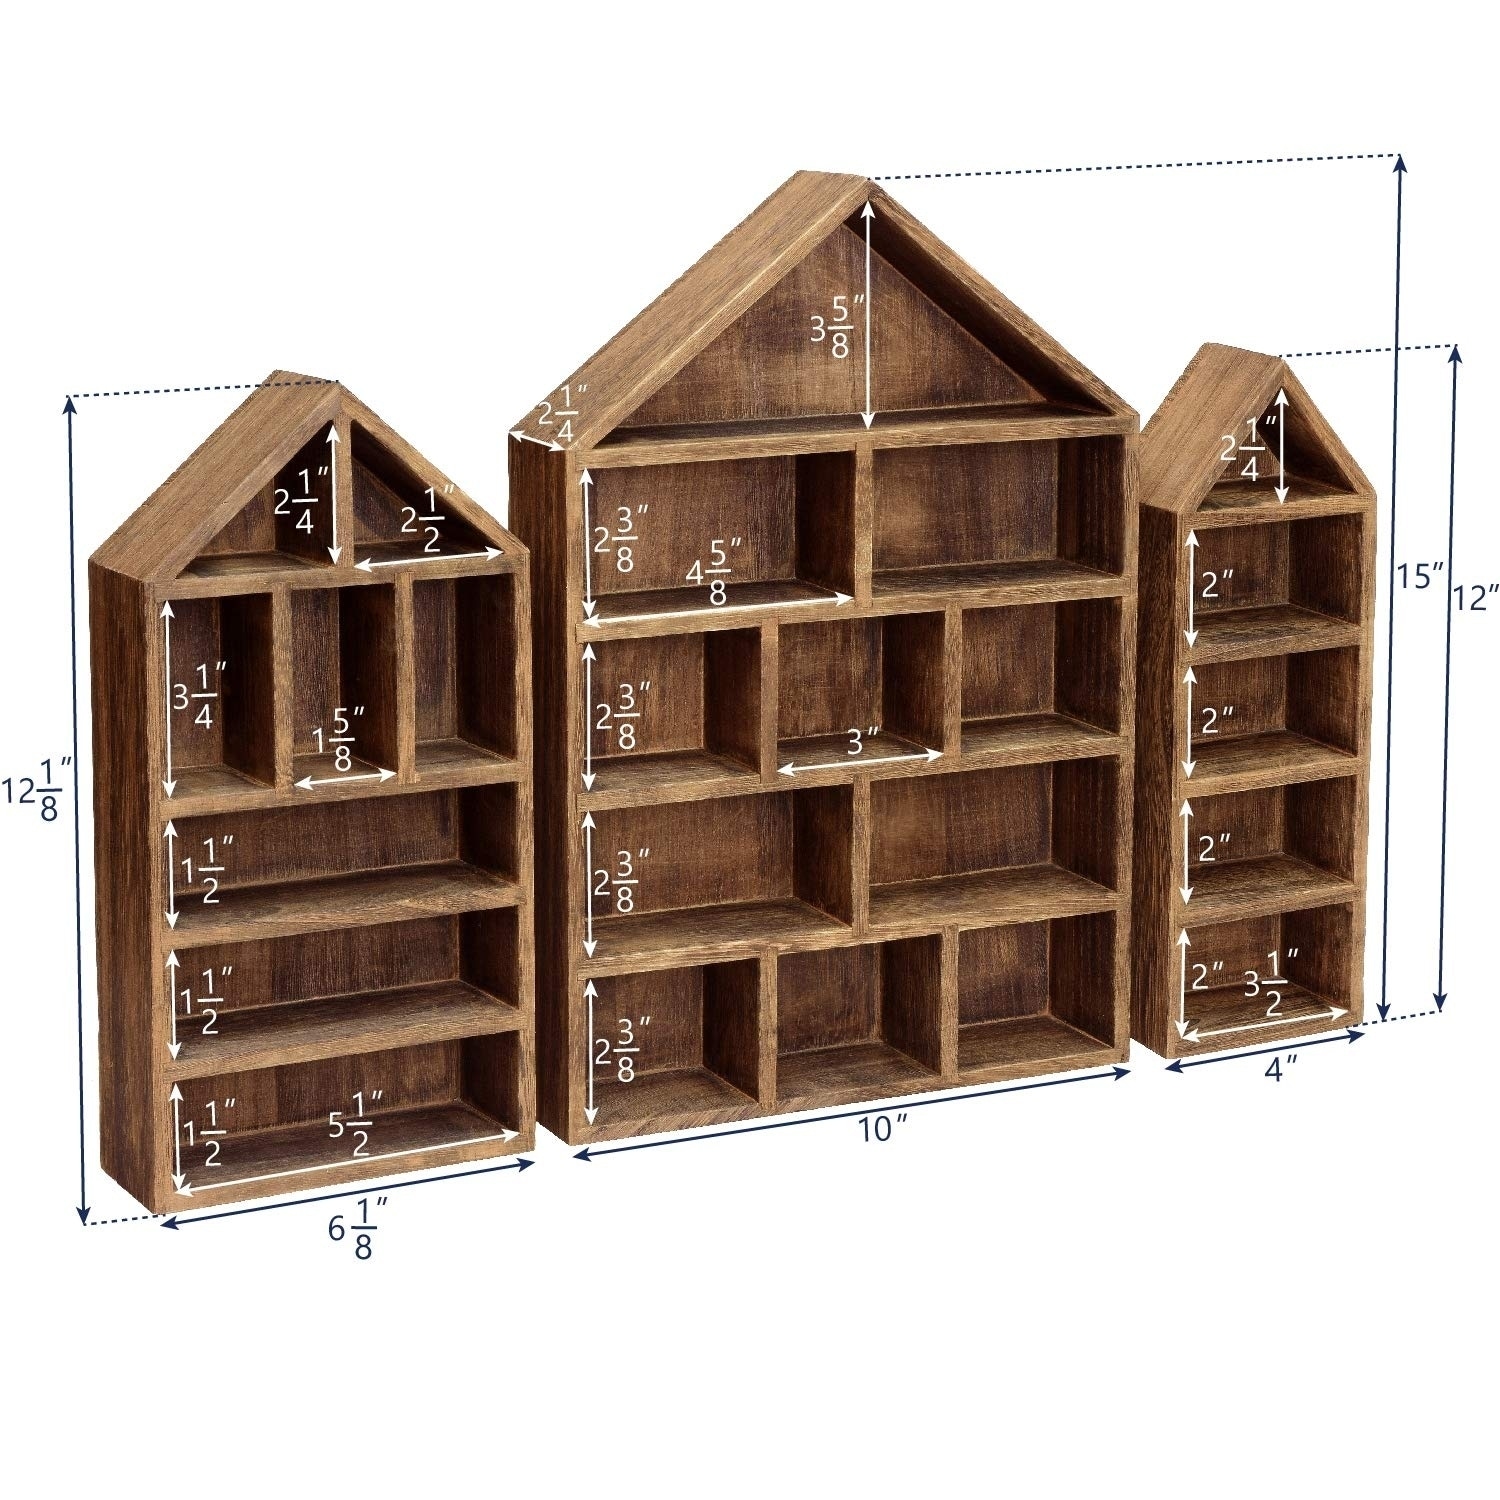 Set of 3 House-Shaped Wooden Shadow Cubby Box Display Shelf Organizer